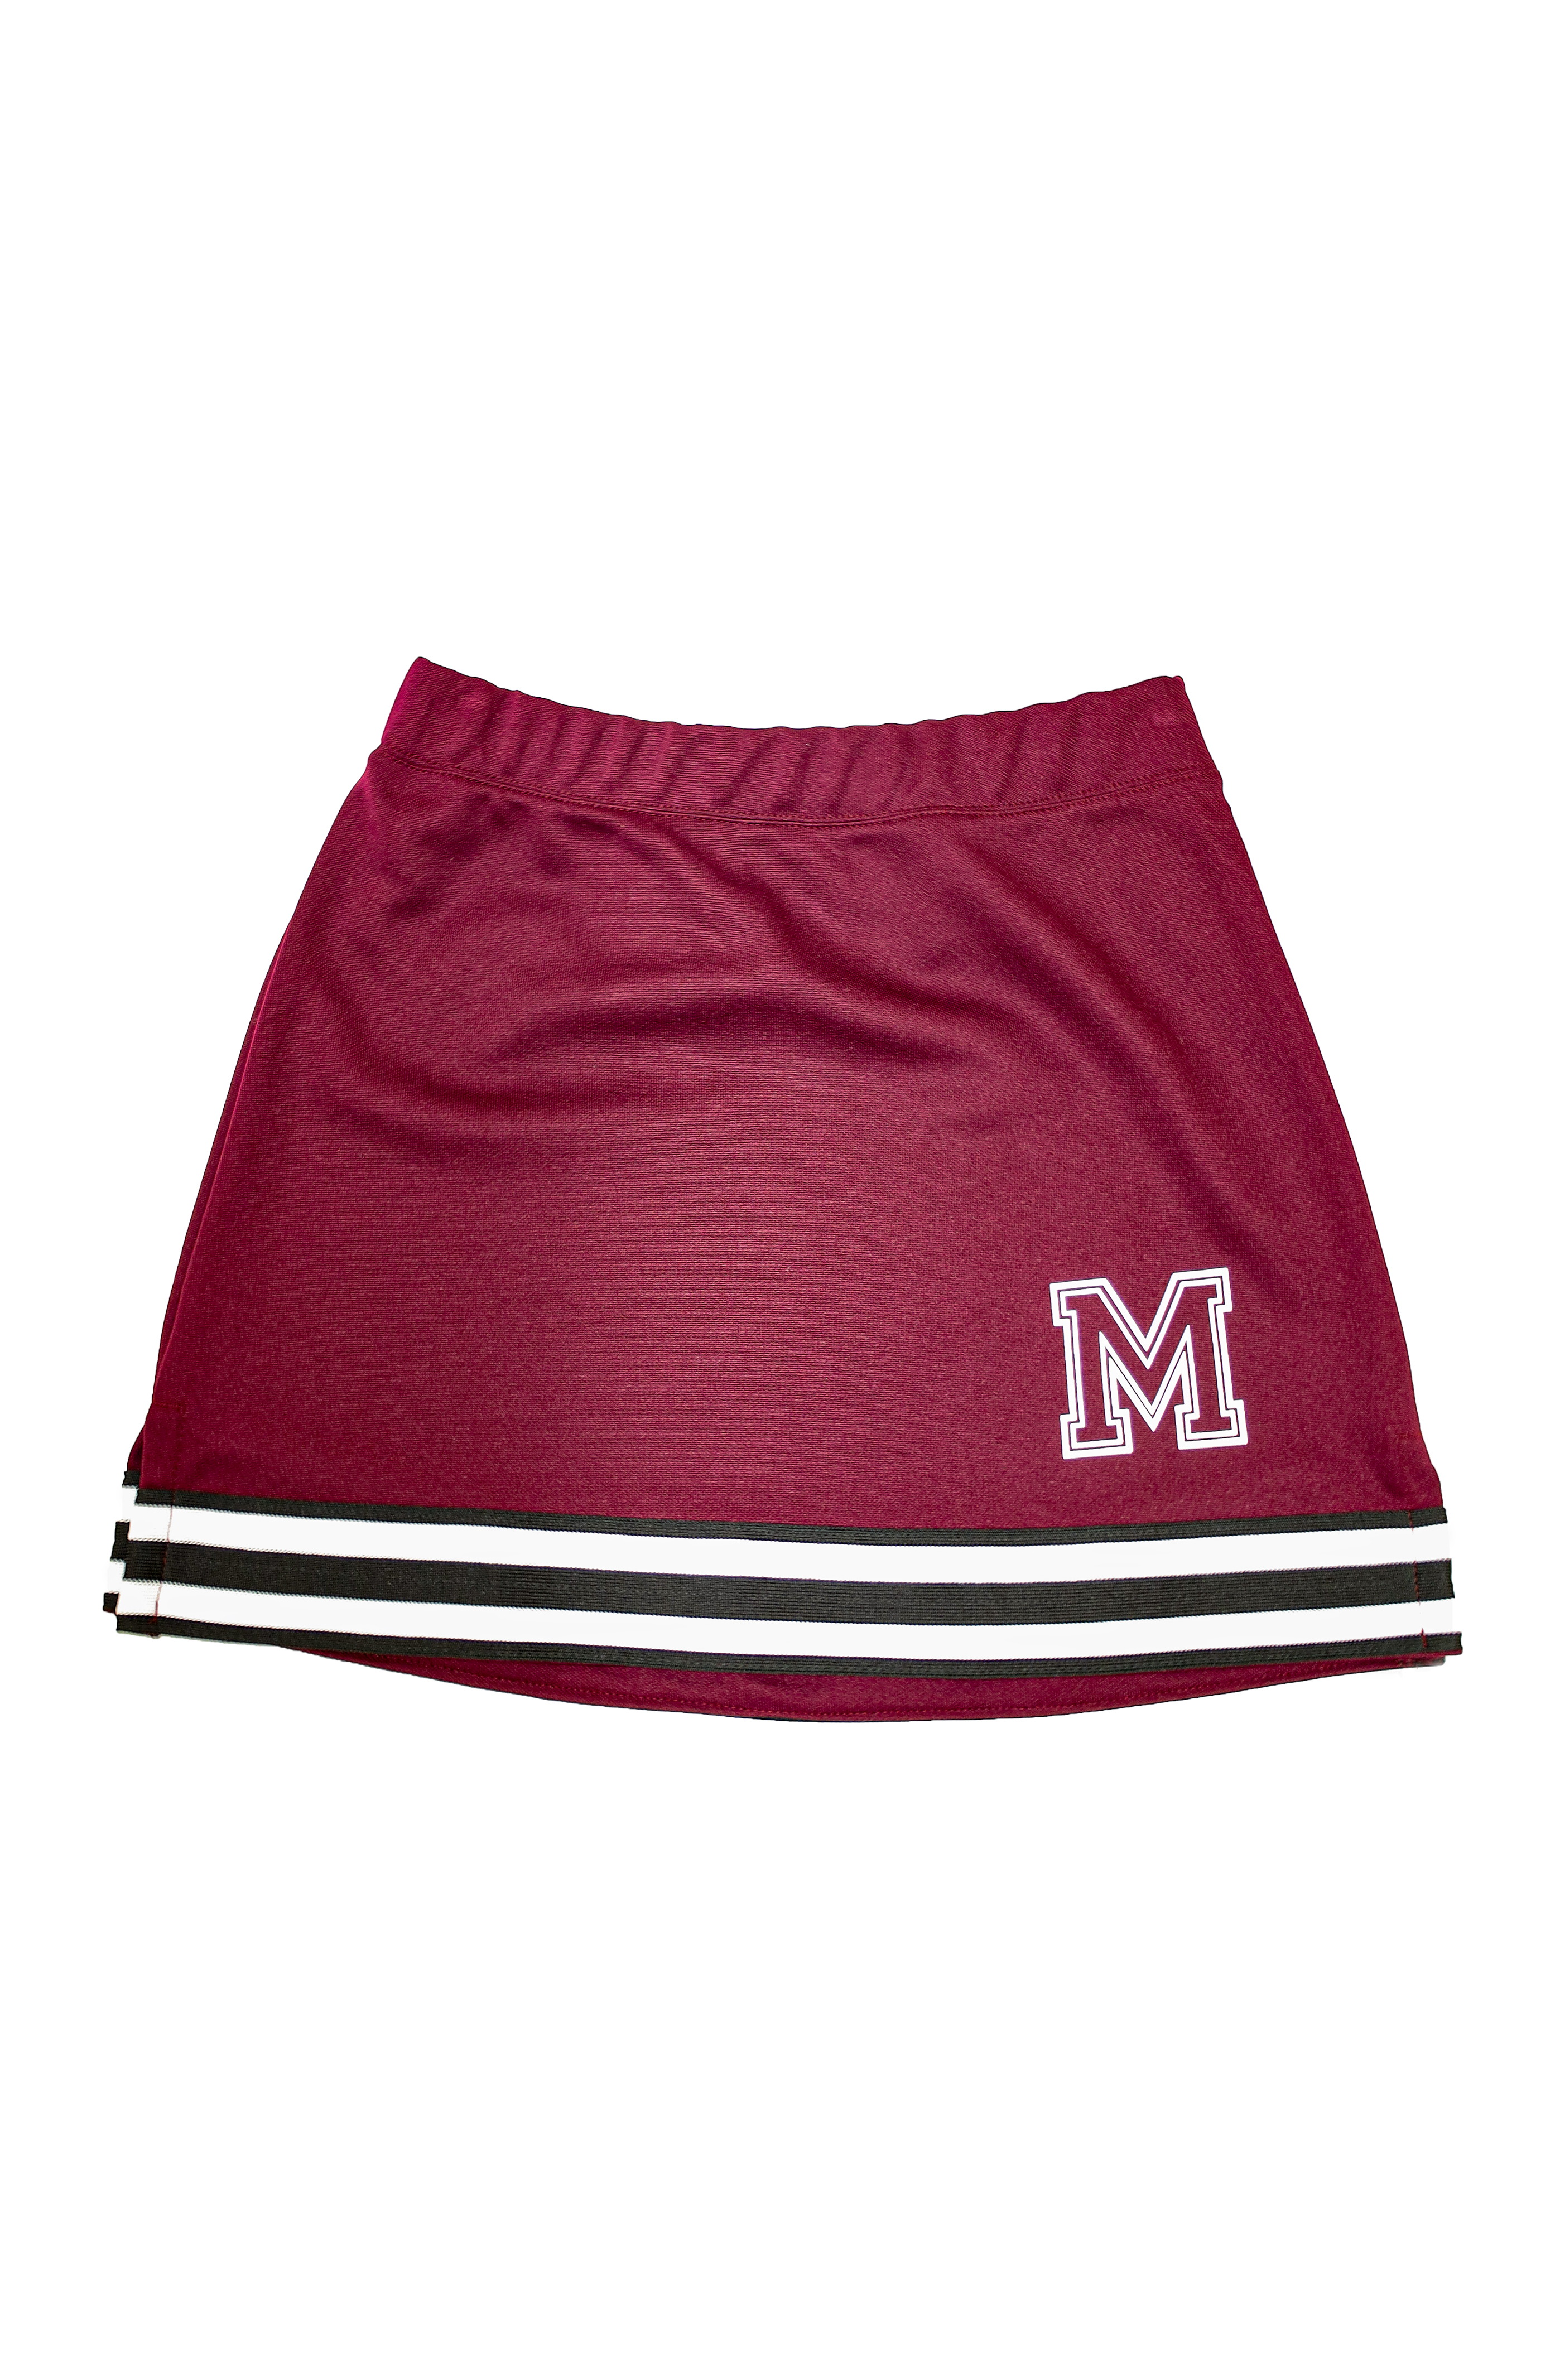 McMaster M Cheer Skirt - #7941148